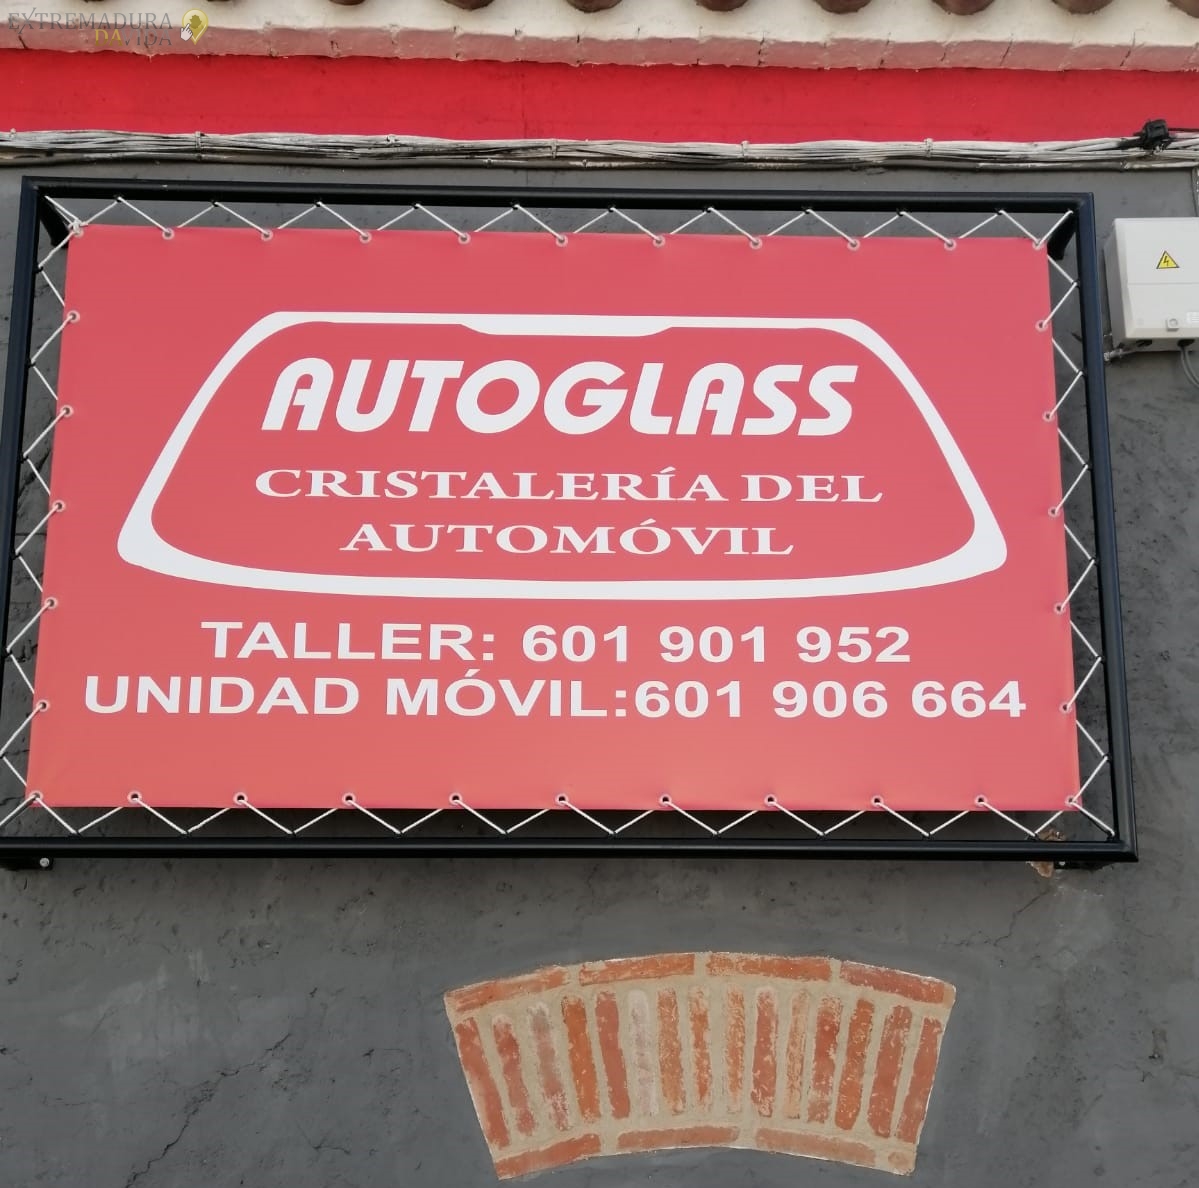 Cristalería del Automóvil en Alange Autoglass Mérida